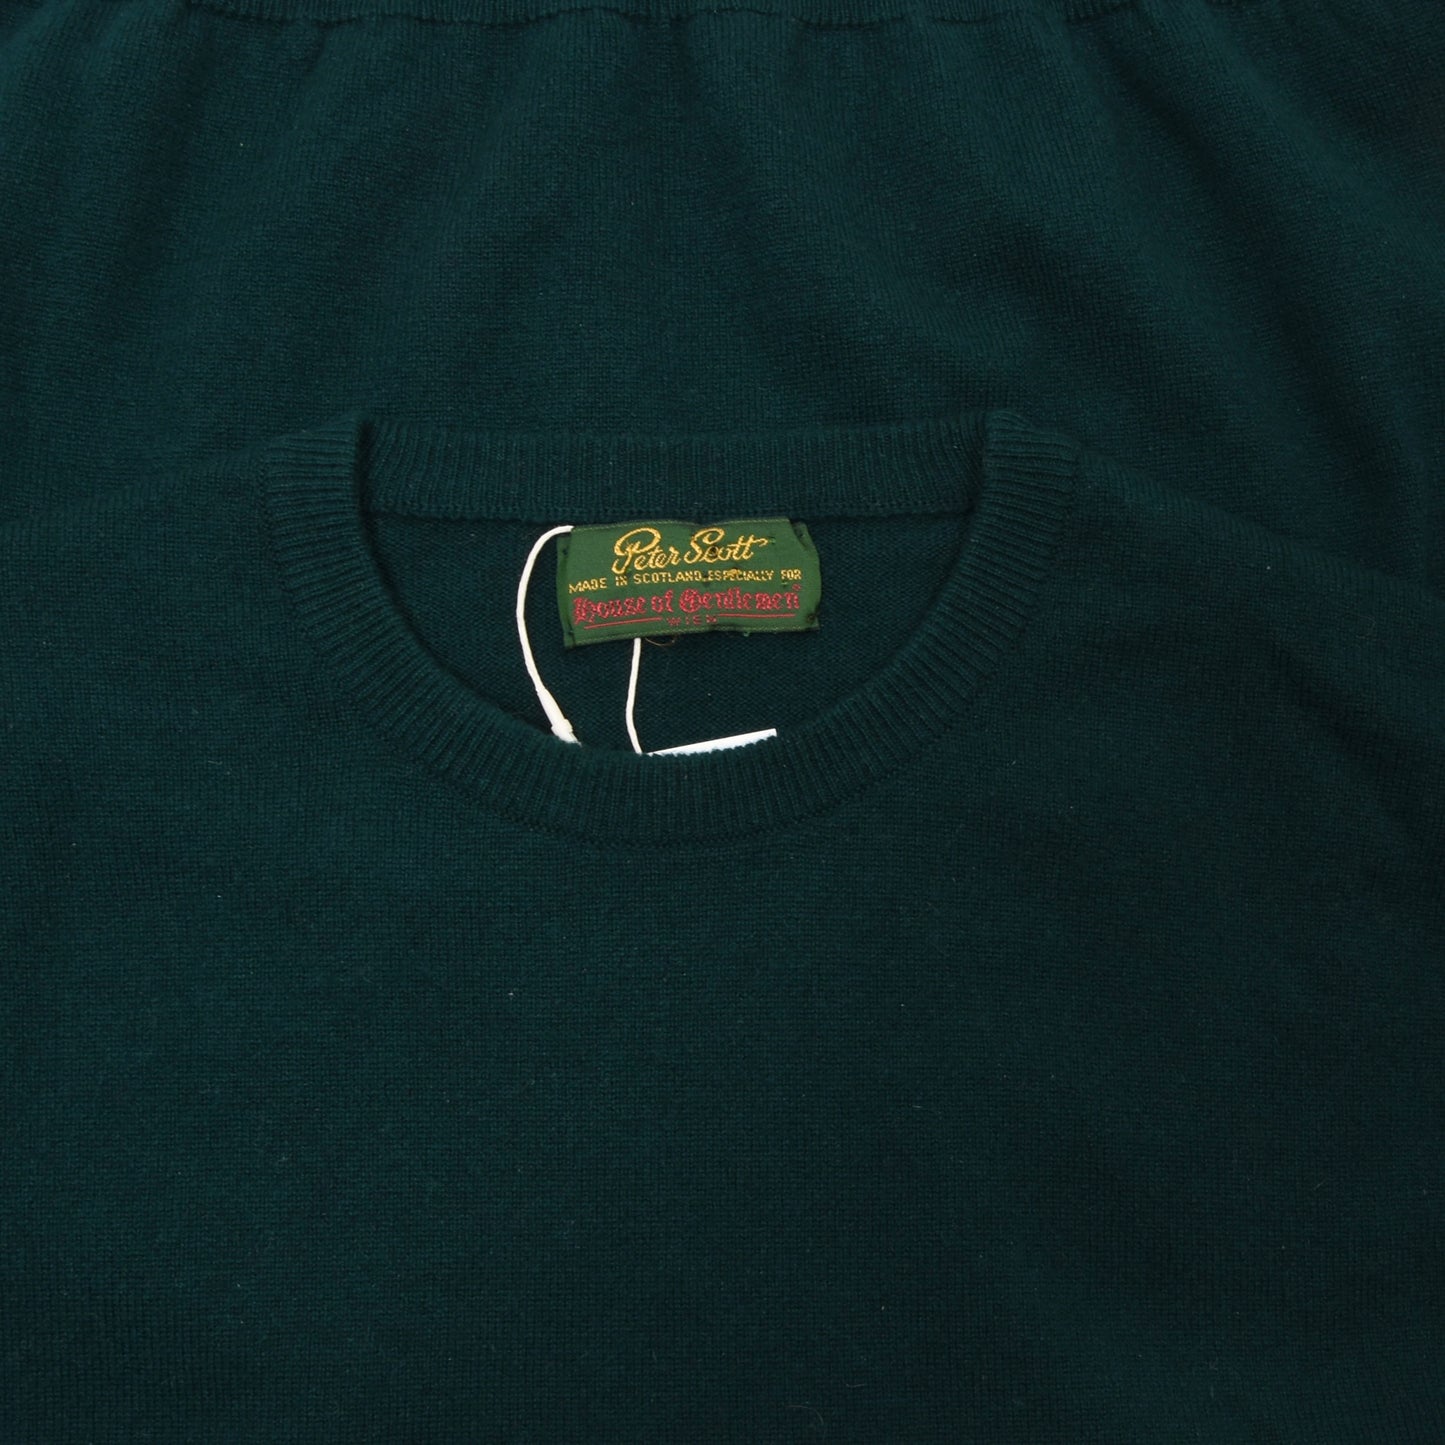 Peter Scott 100% Cashmere Sweater Size UK40 Chest ca. 54cm - Green